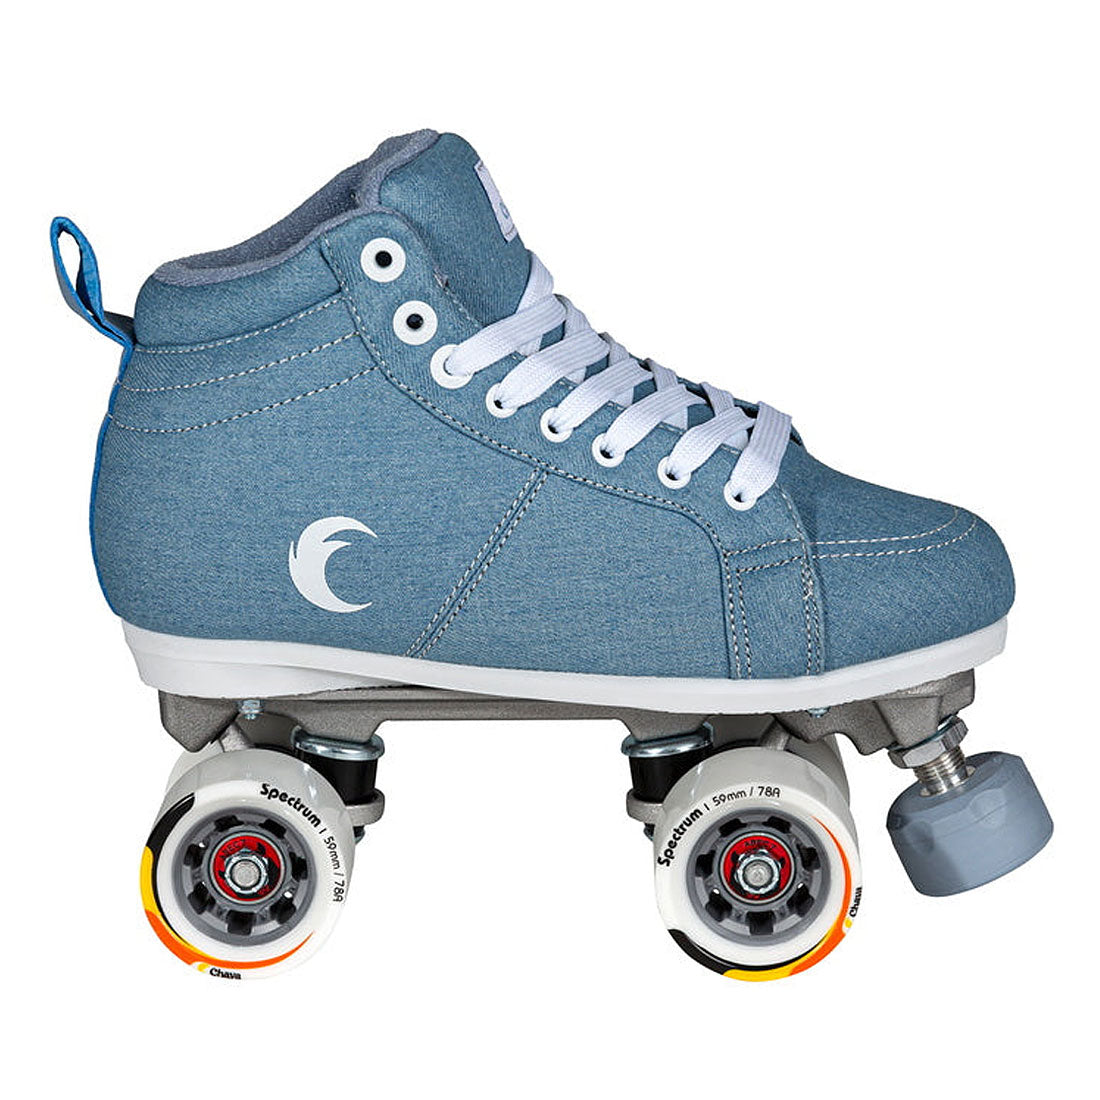 Chaya Vintage Skate - Denim Roller Skates